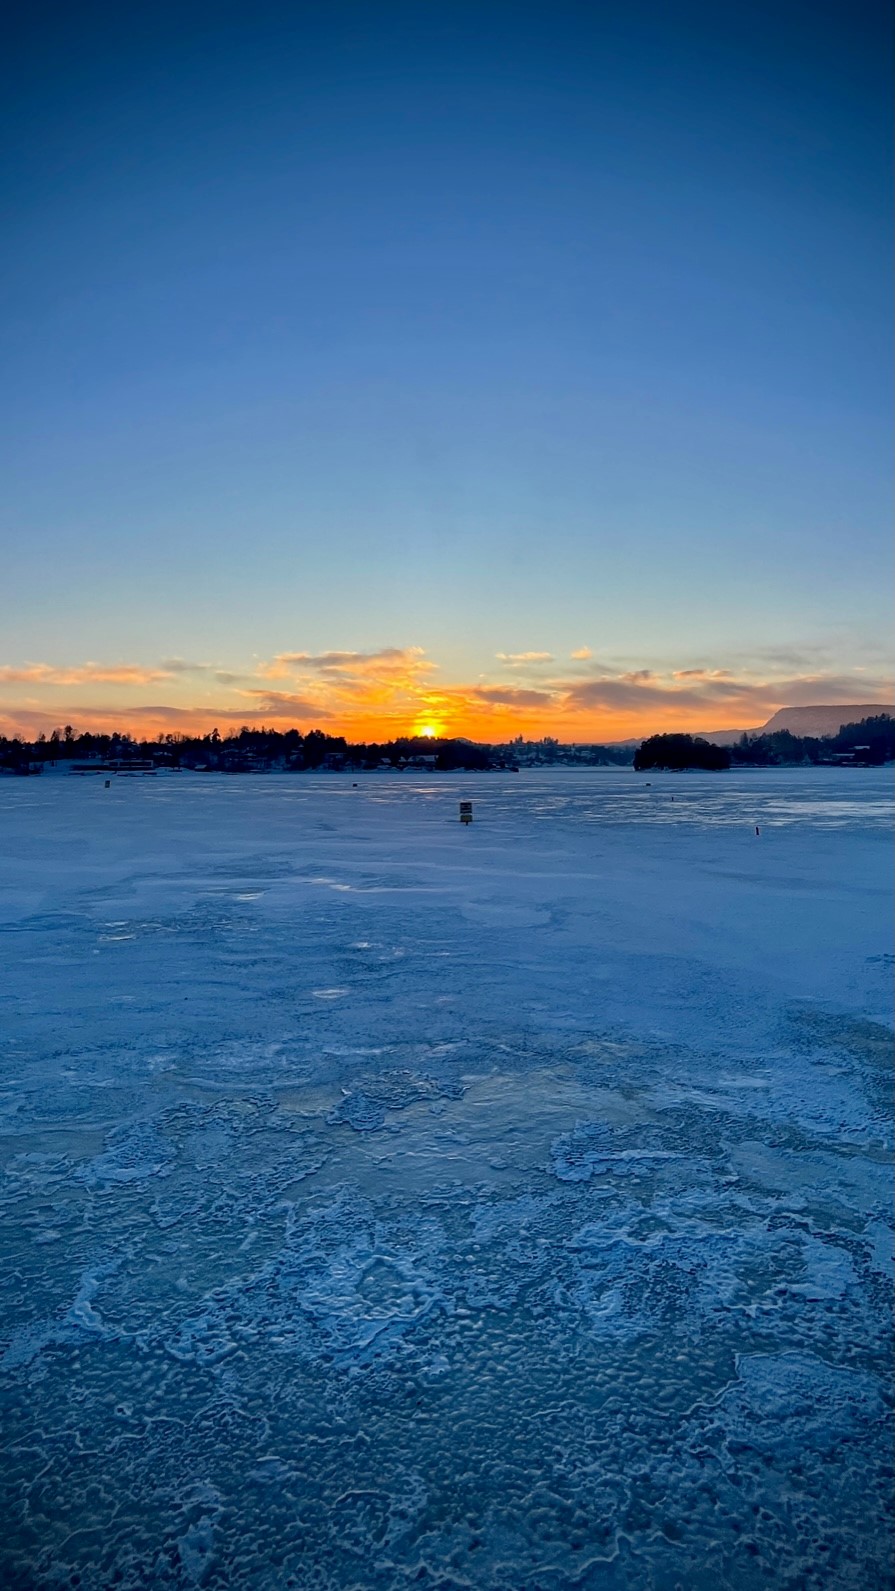 Sunset over frozen water